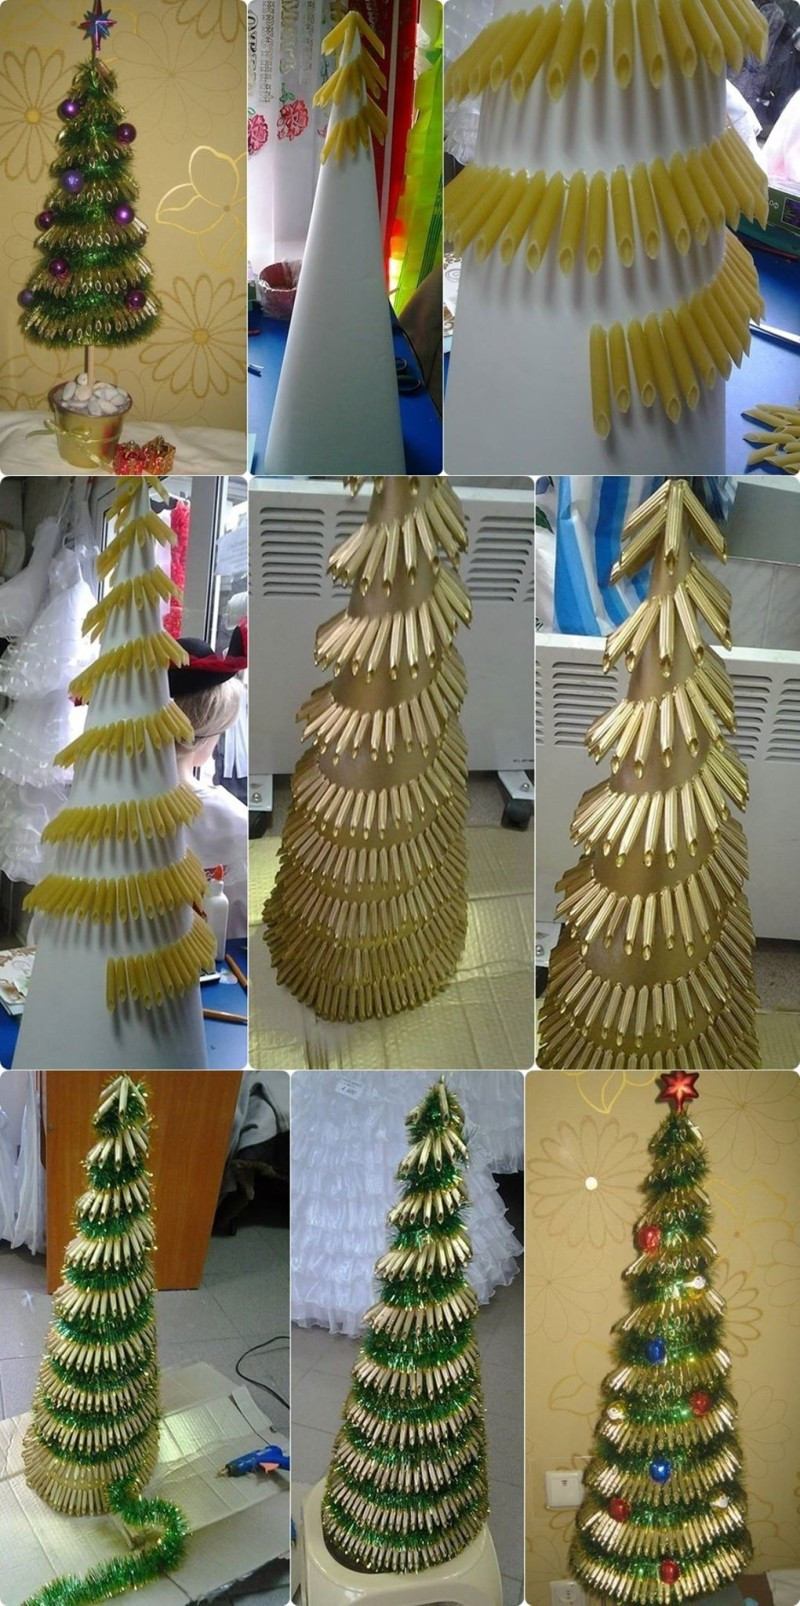 DIY Christmas Tree Ideas
 23 Creative And Unusual DIY Christmas Tree Ideas